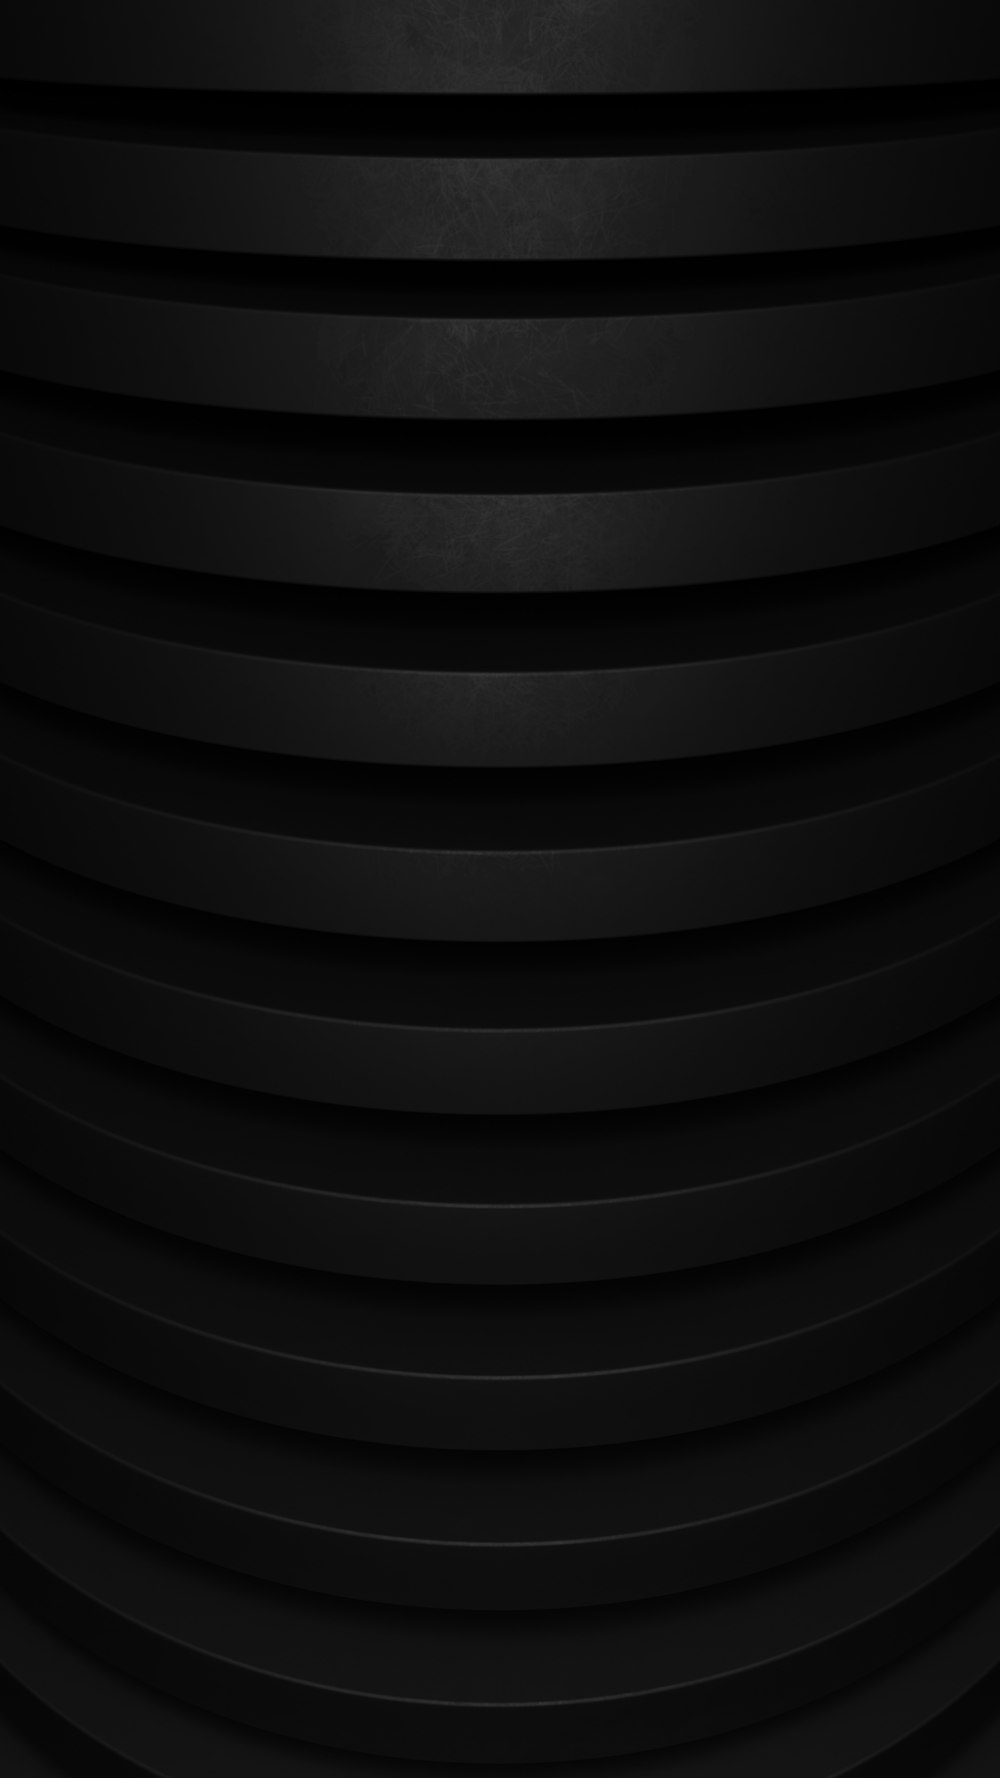 a close up of a black circular object